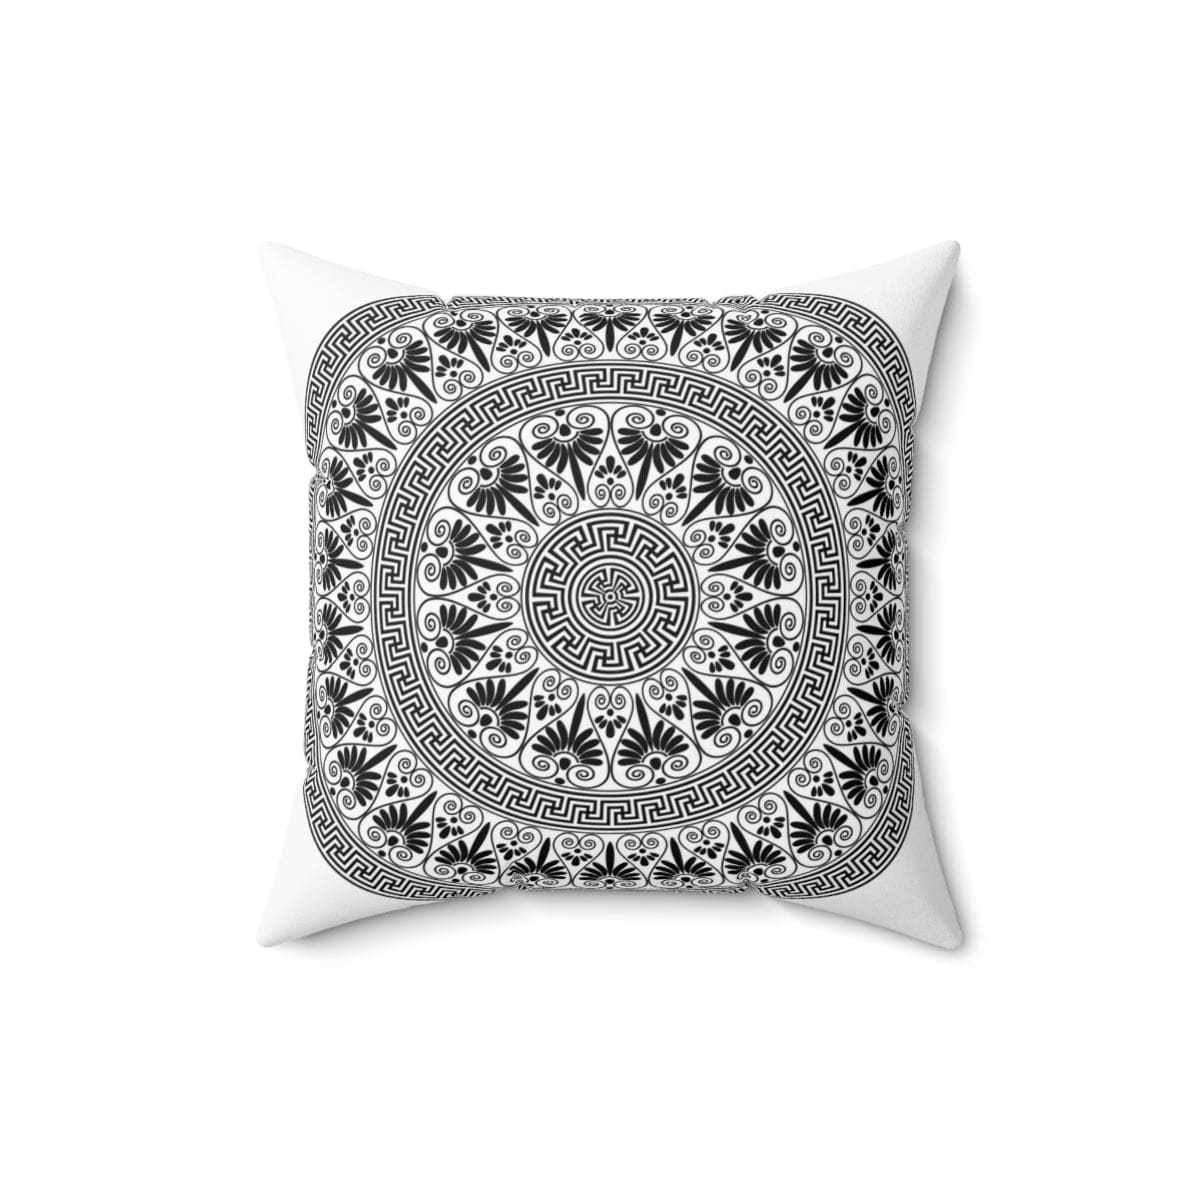 Decorative Throw Pillow Case White And Black Geometric Boho Pattern - Decorative